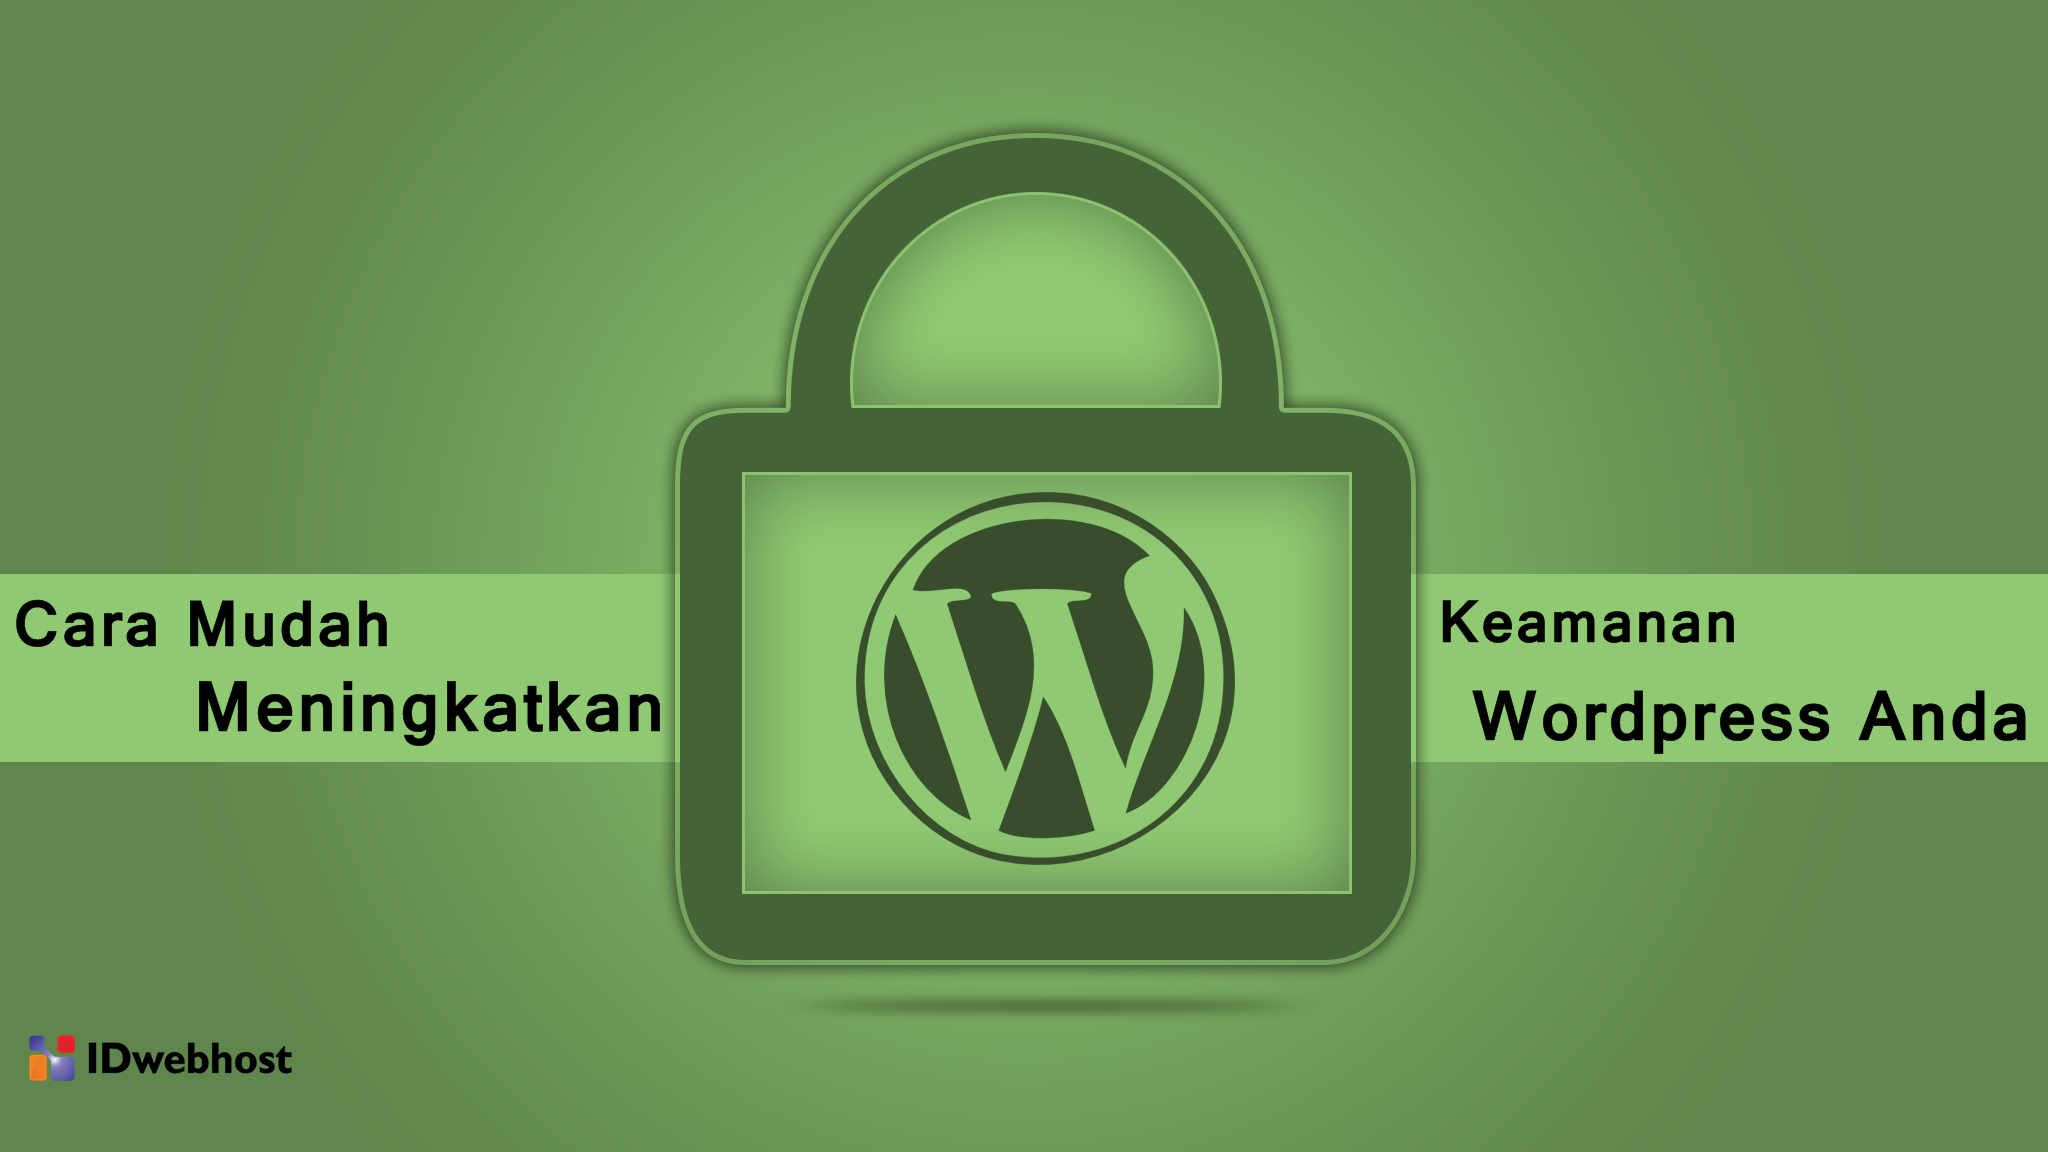 Cara Mudah Meningkatkan Keamanan Wordpress